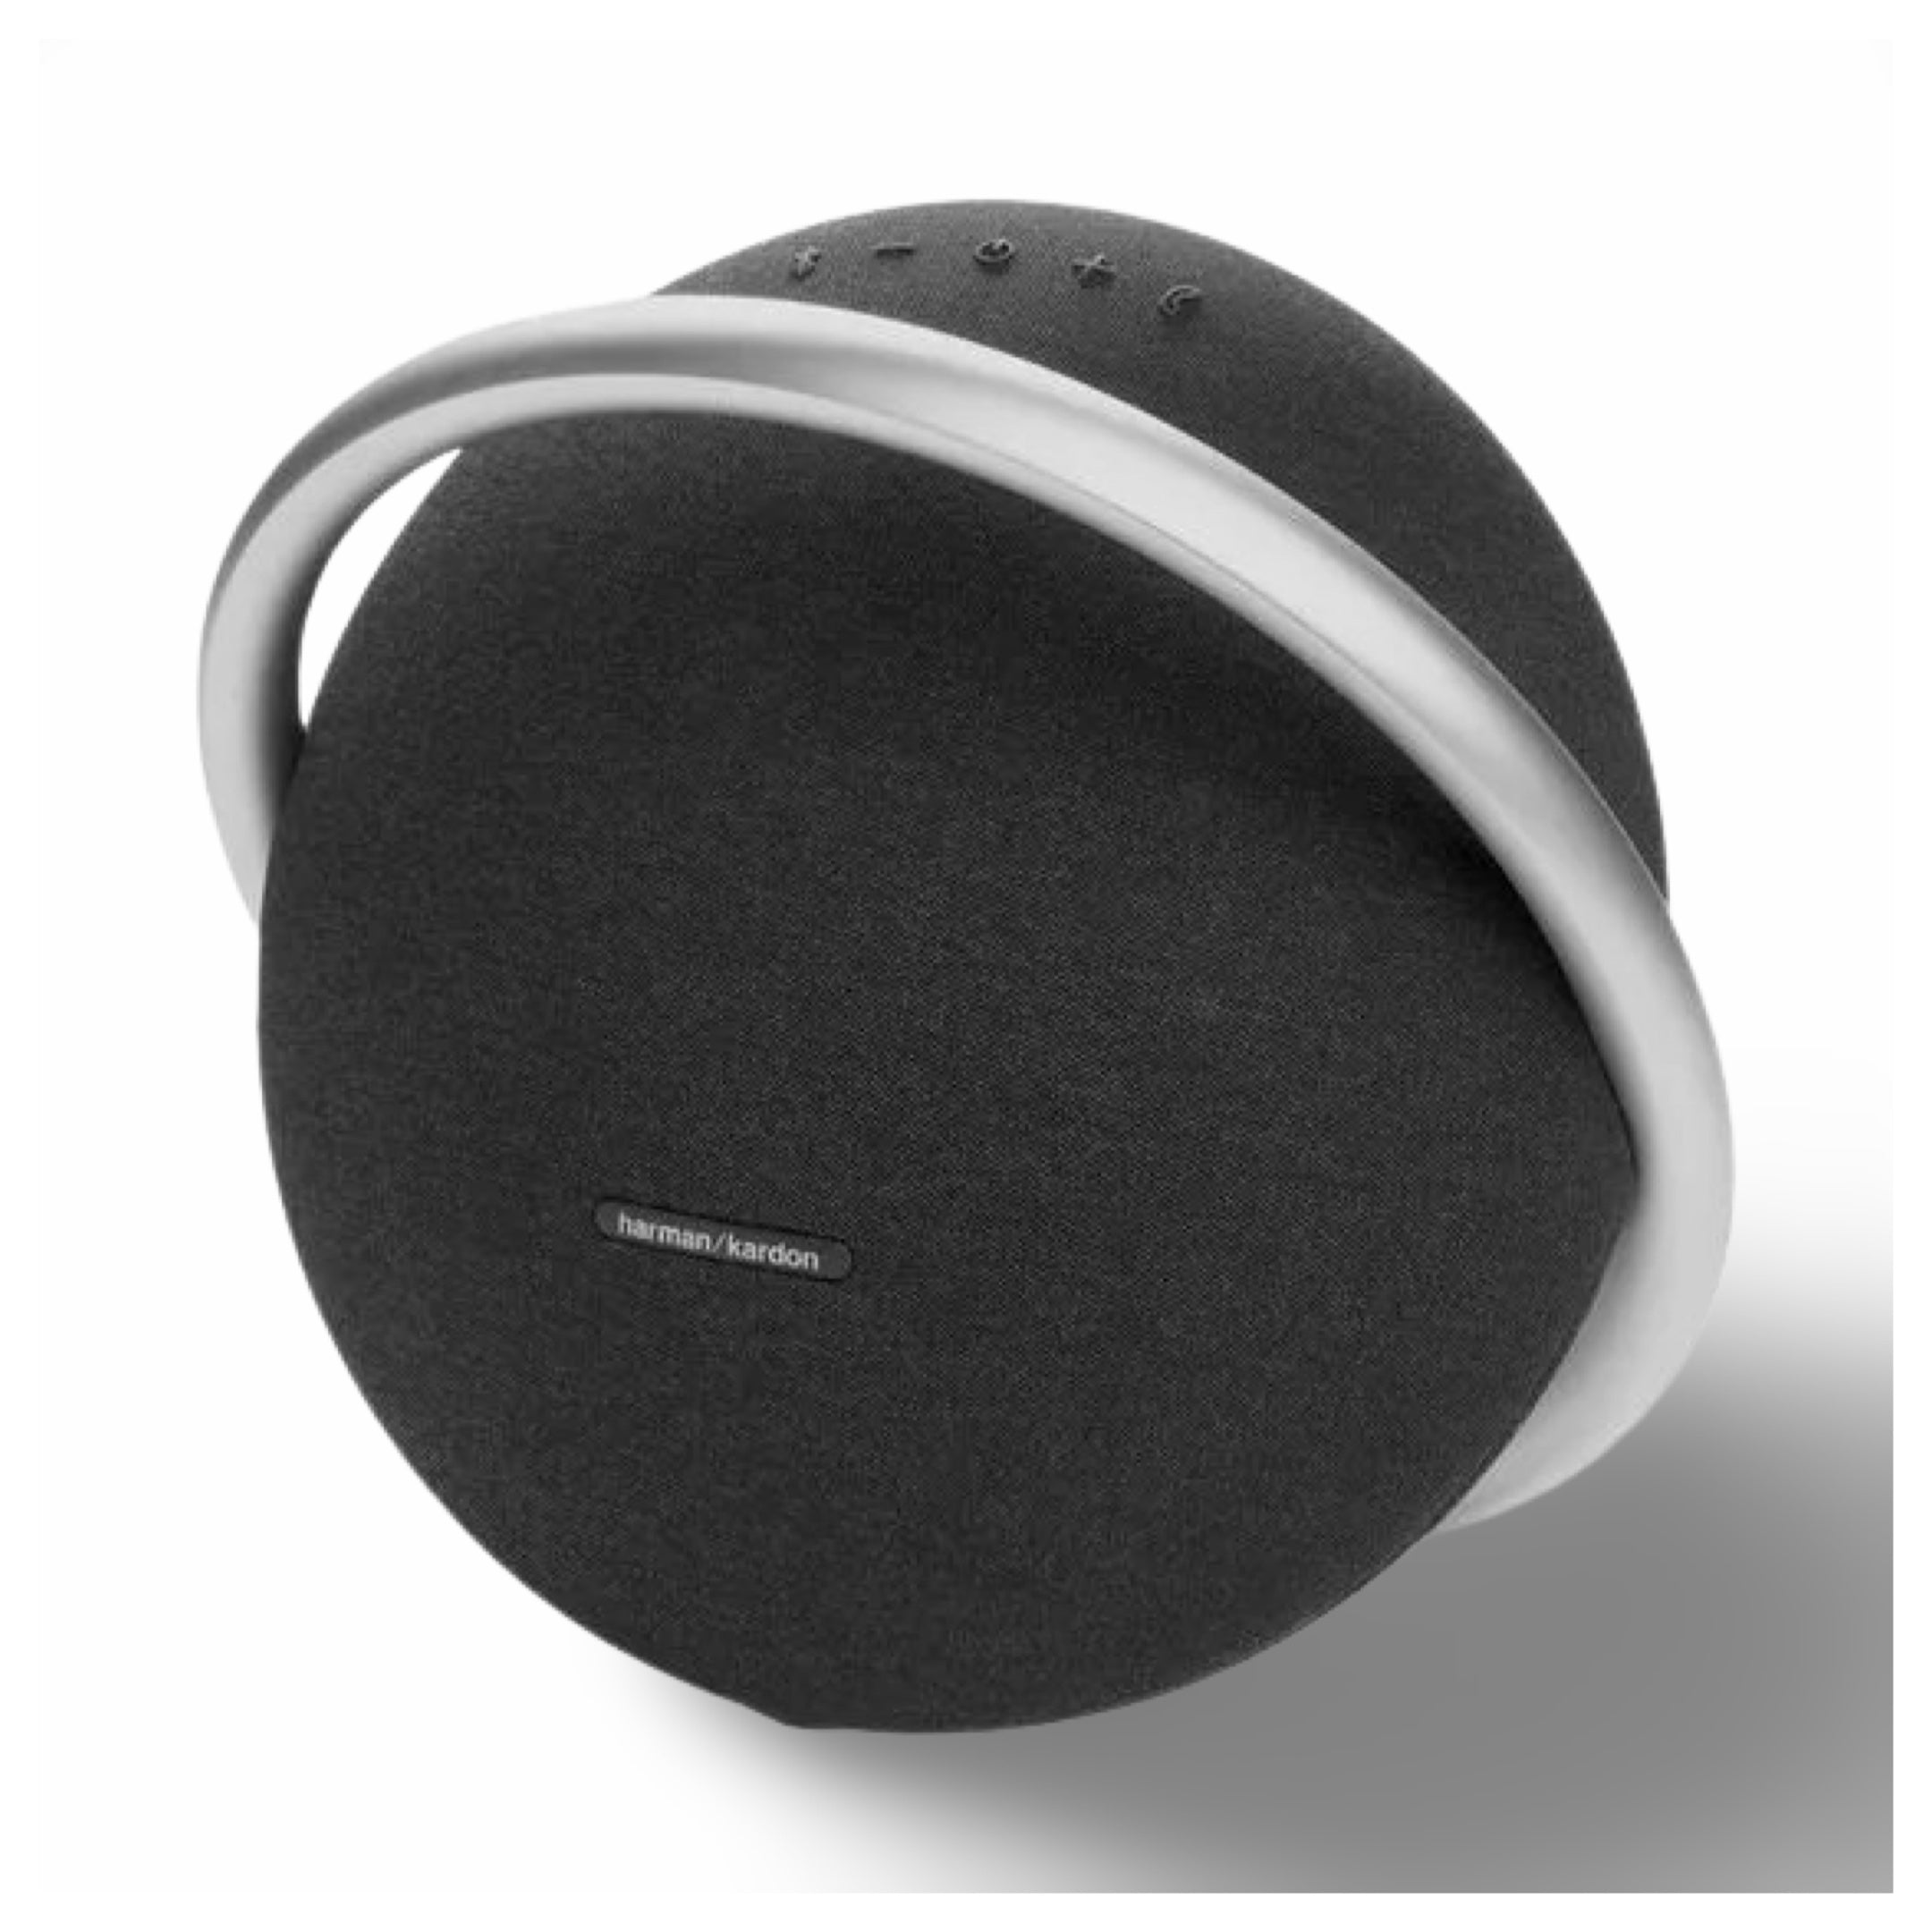 Onyx Studio 8 Harman Kardon Portable Stereo Bluetooth speaker